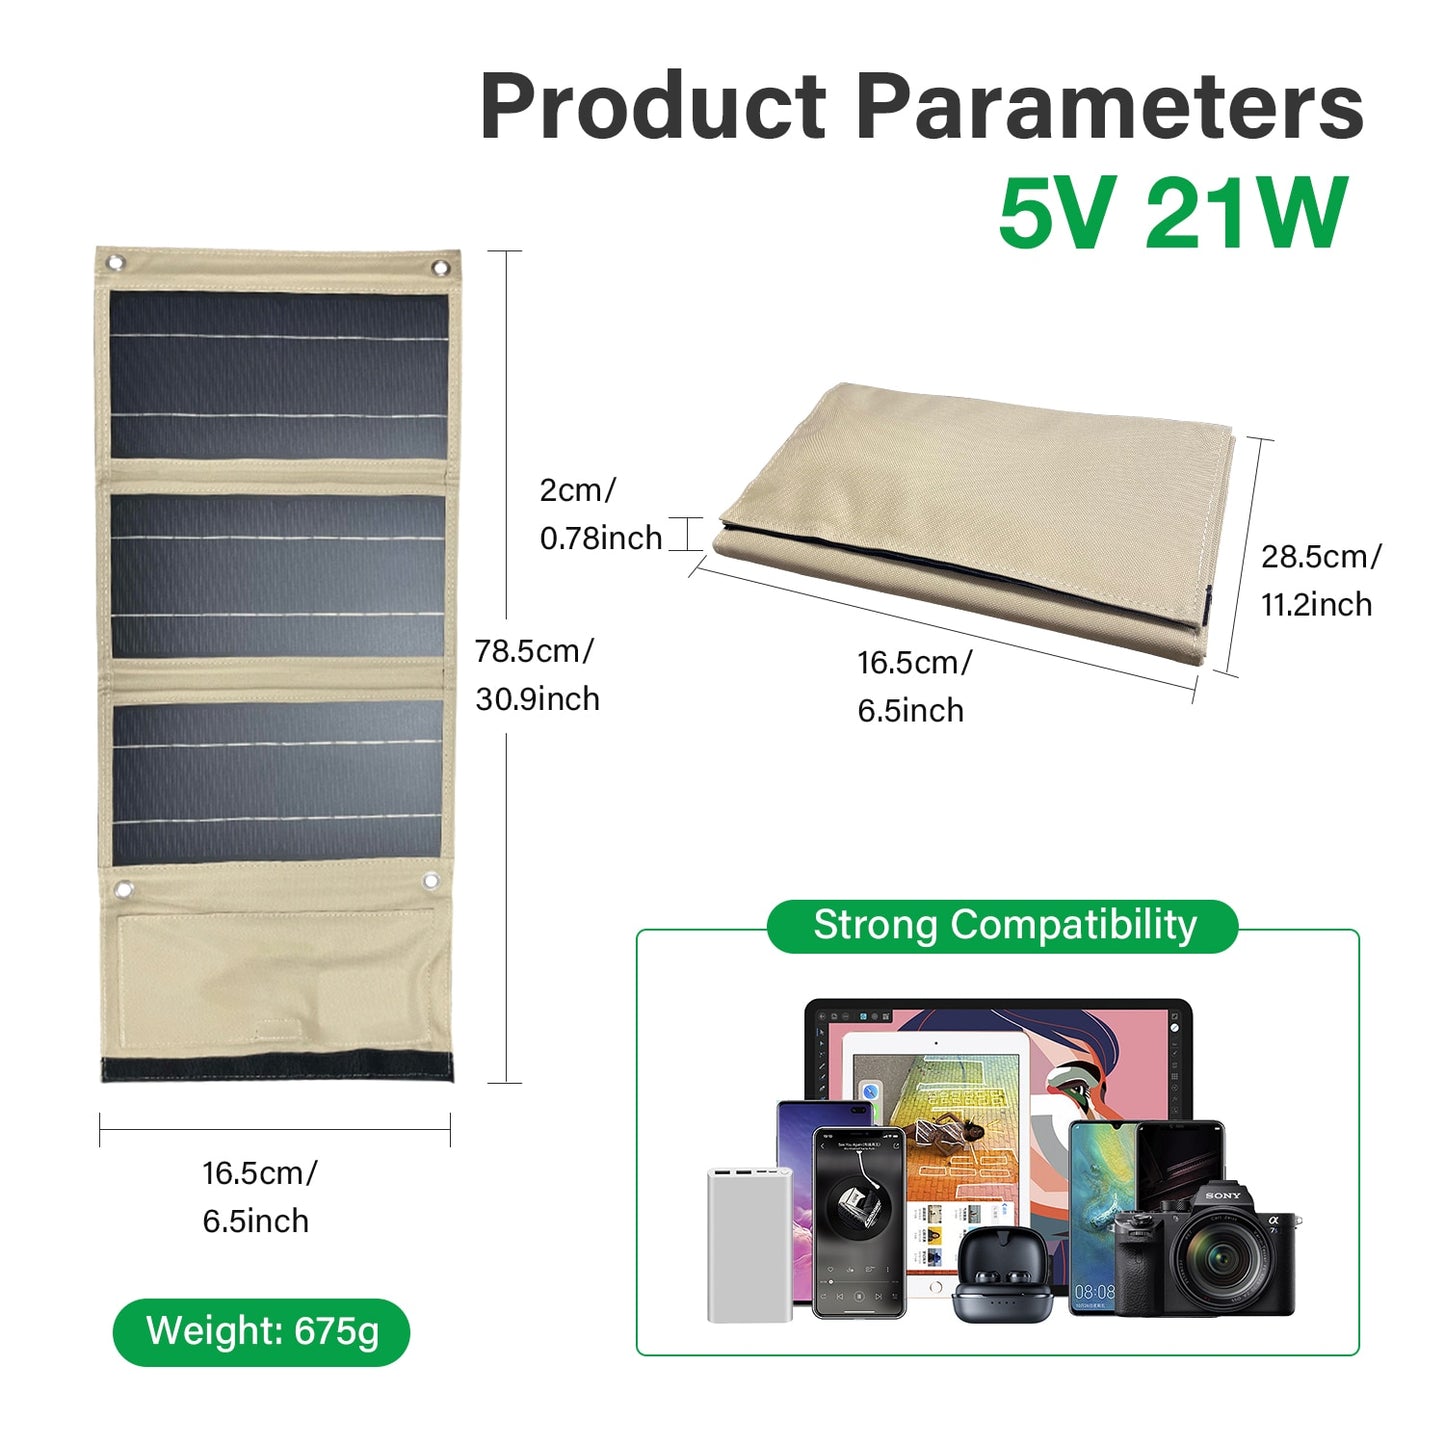 21W Solar Panel, Product Parameters 5v 21W 2cm/ 0.78